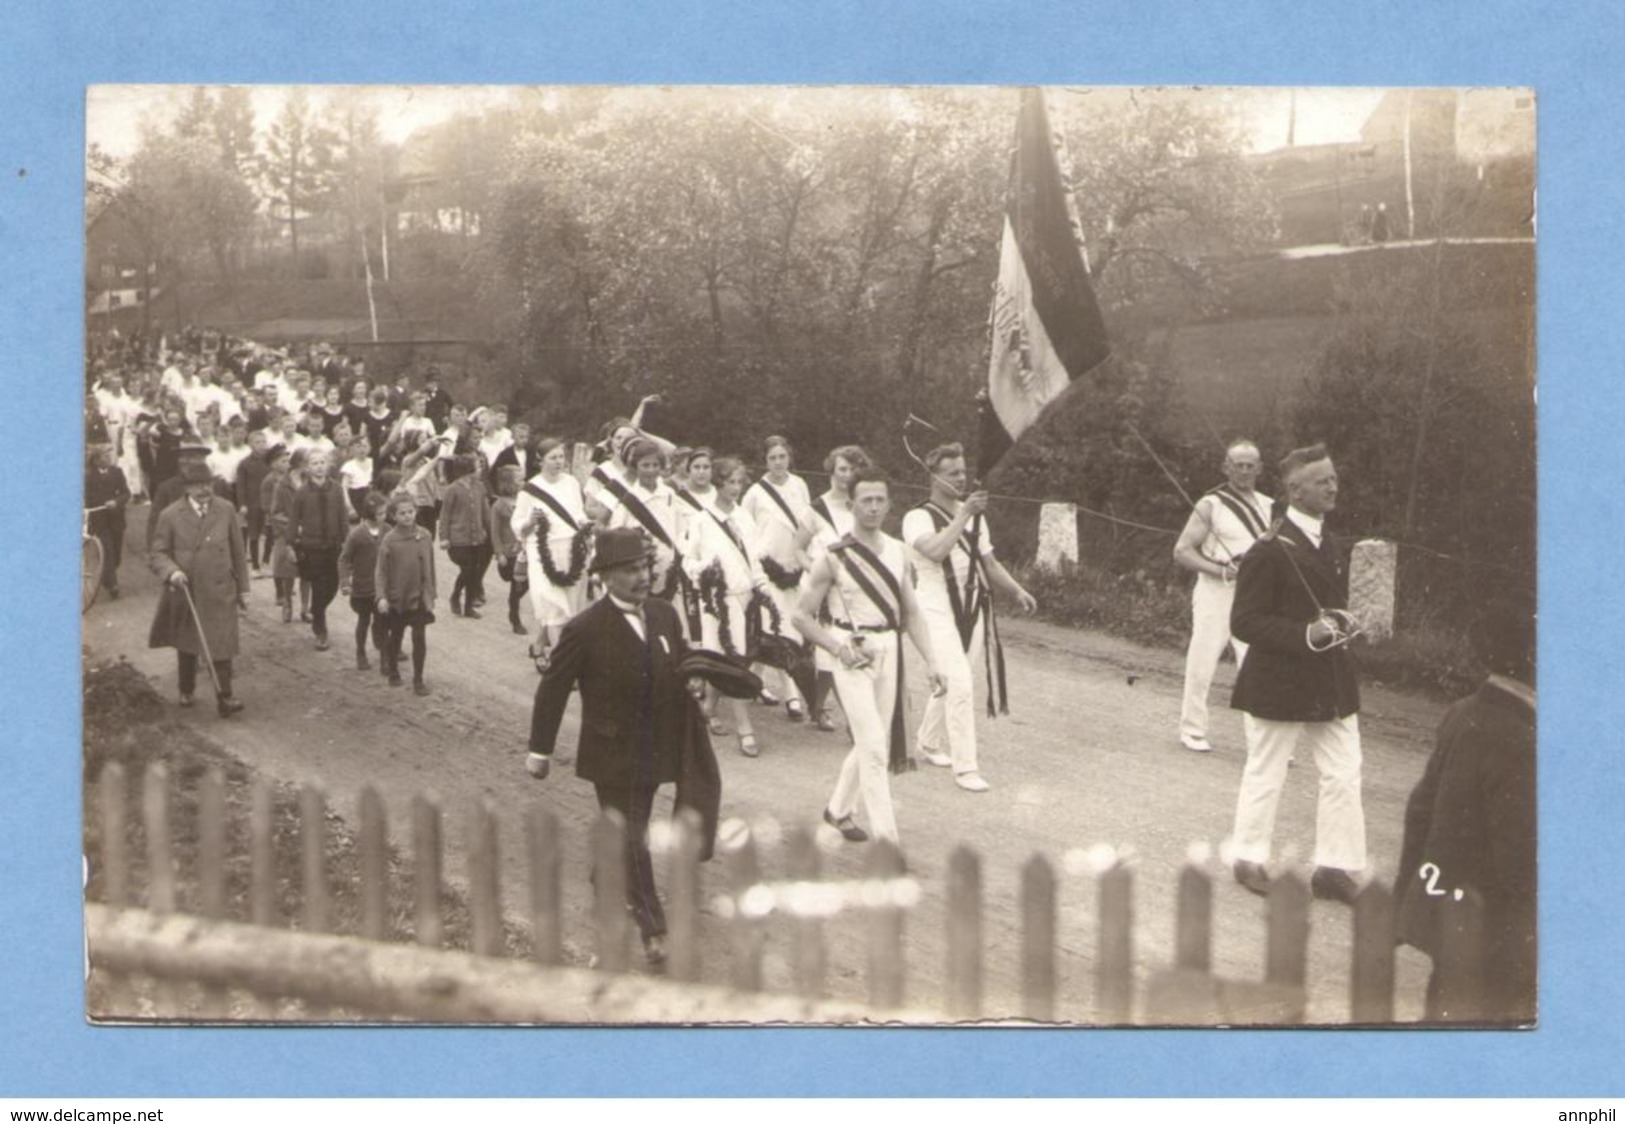 9495 Germany (?) 1928 Athletes With A Flag, Children. And Etc.  Original Photo Pc - Da Identificare